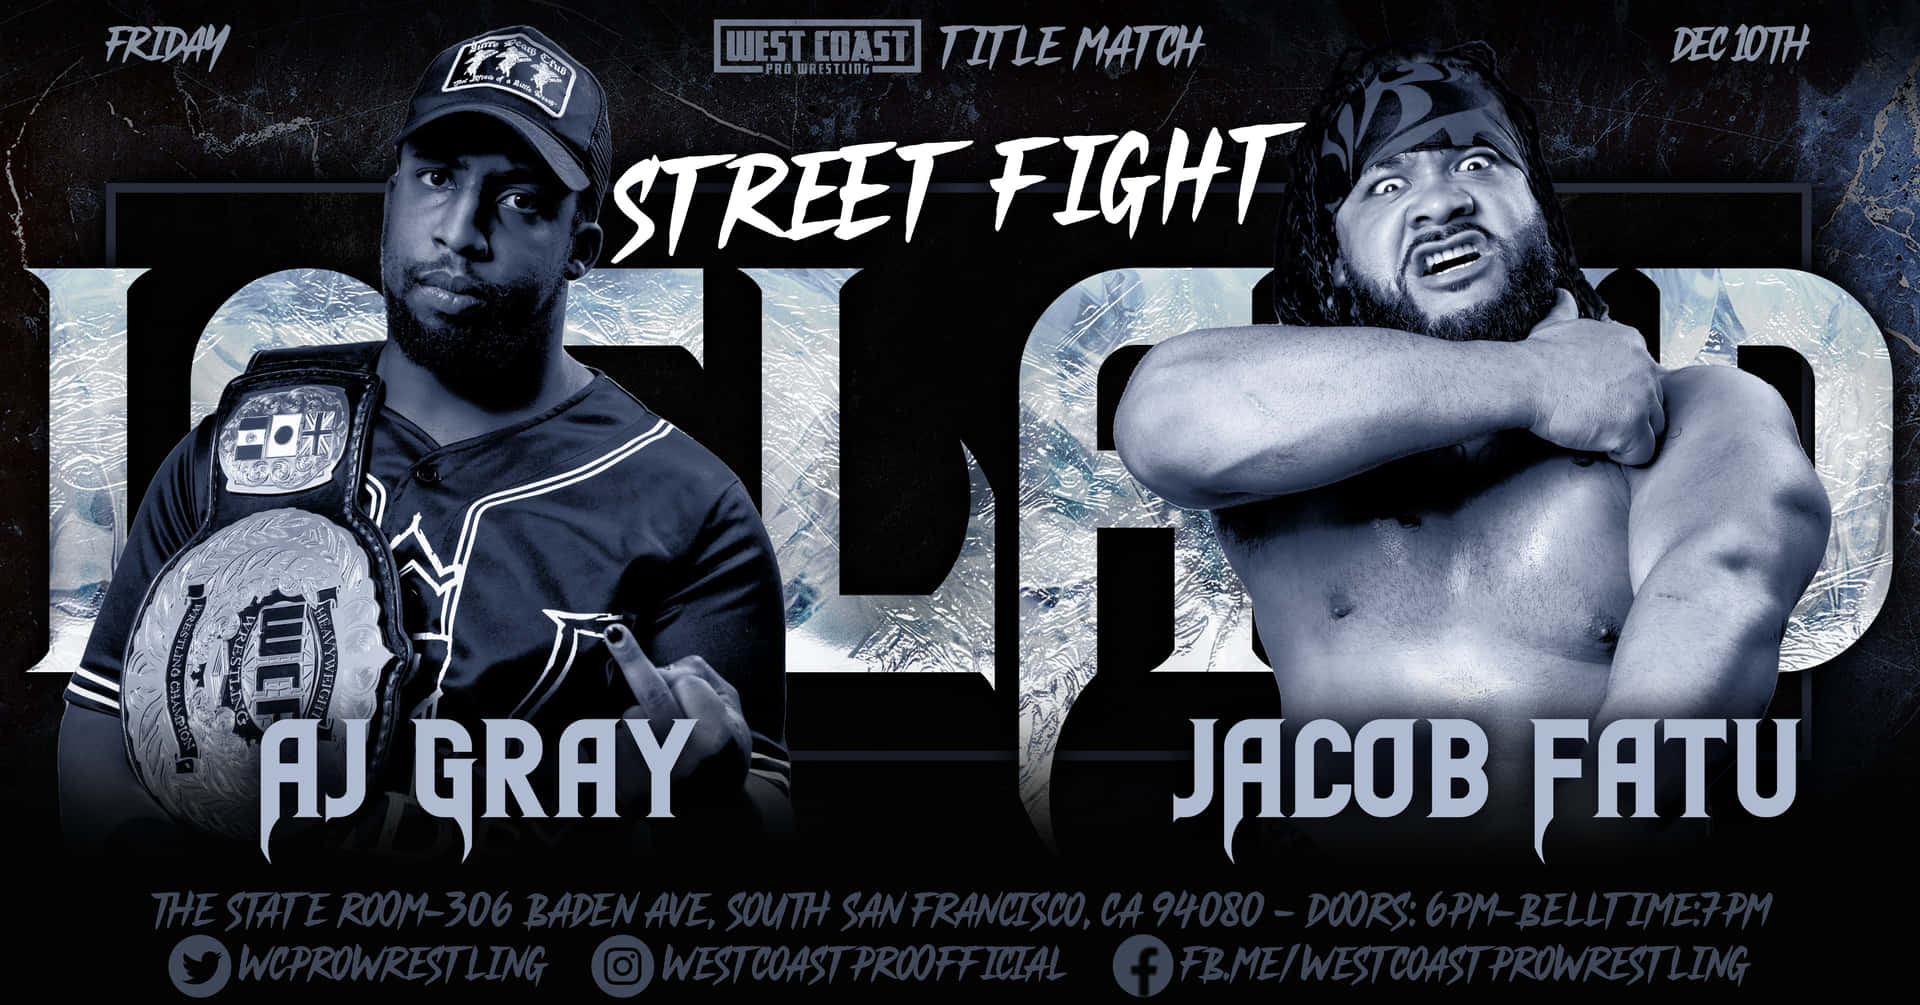 Caption: An Intense Wrestling Match Between Jacob Fatu and AJ Gray Wallpaper